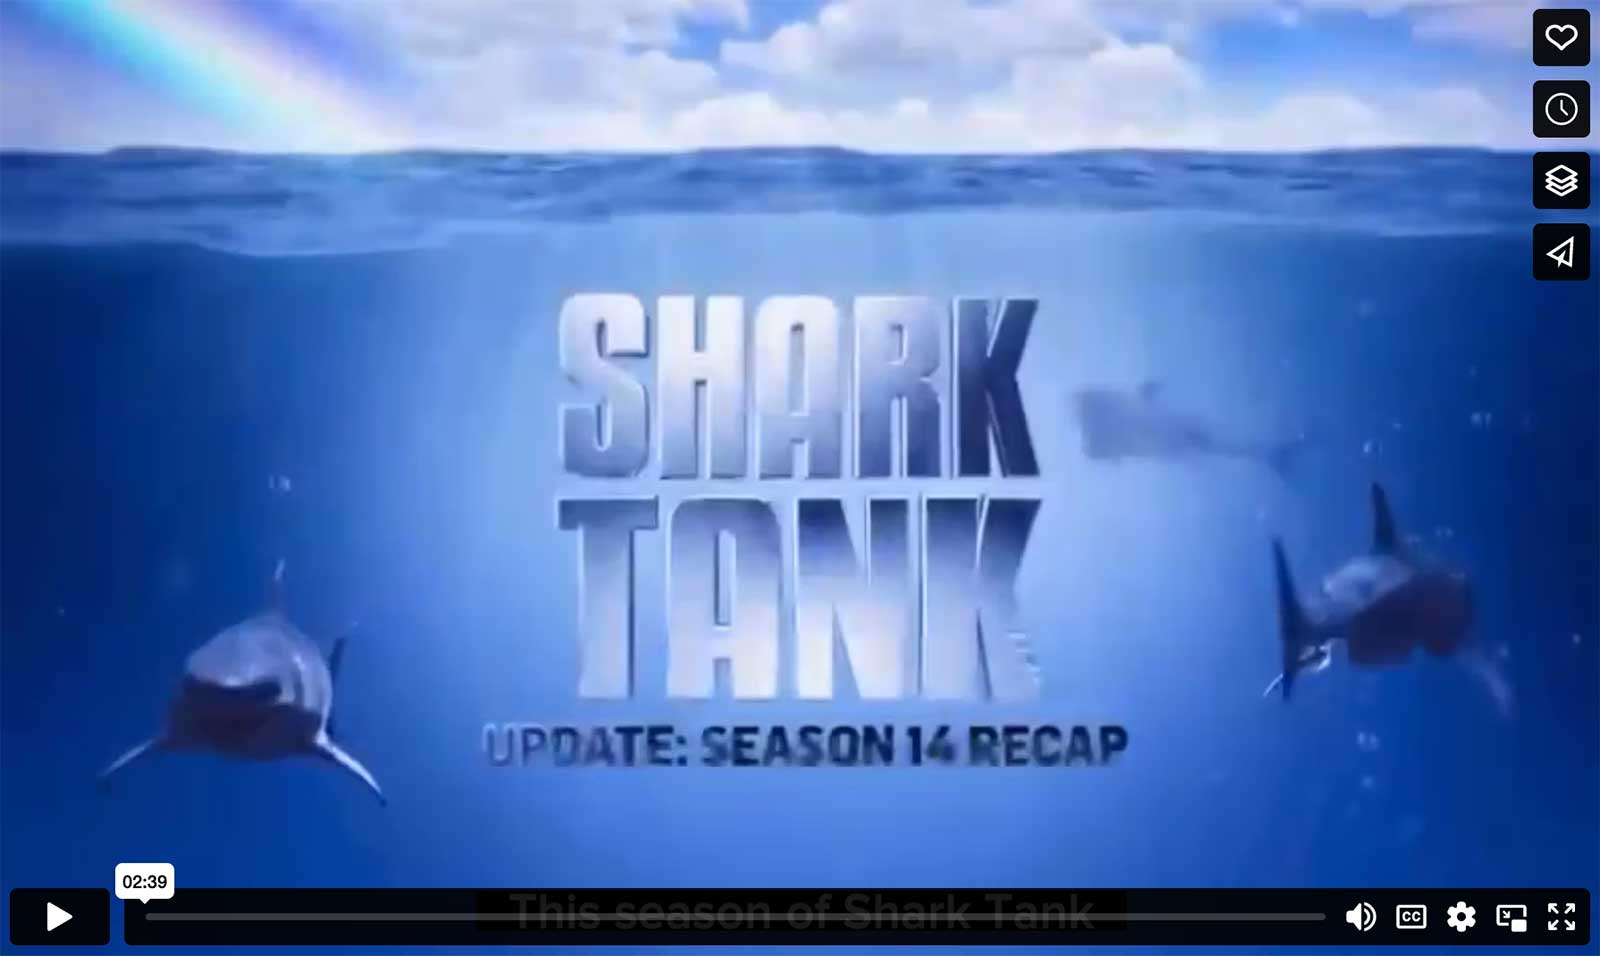 TANDM Surf featured in the Season Finale of Shark Tank Season 14!